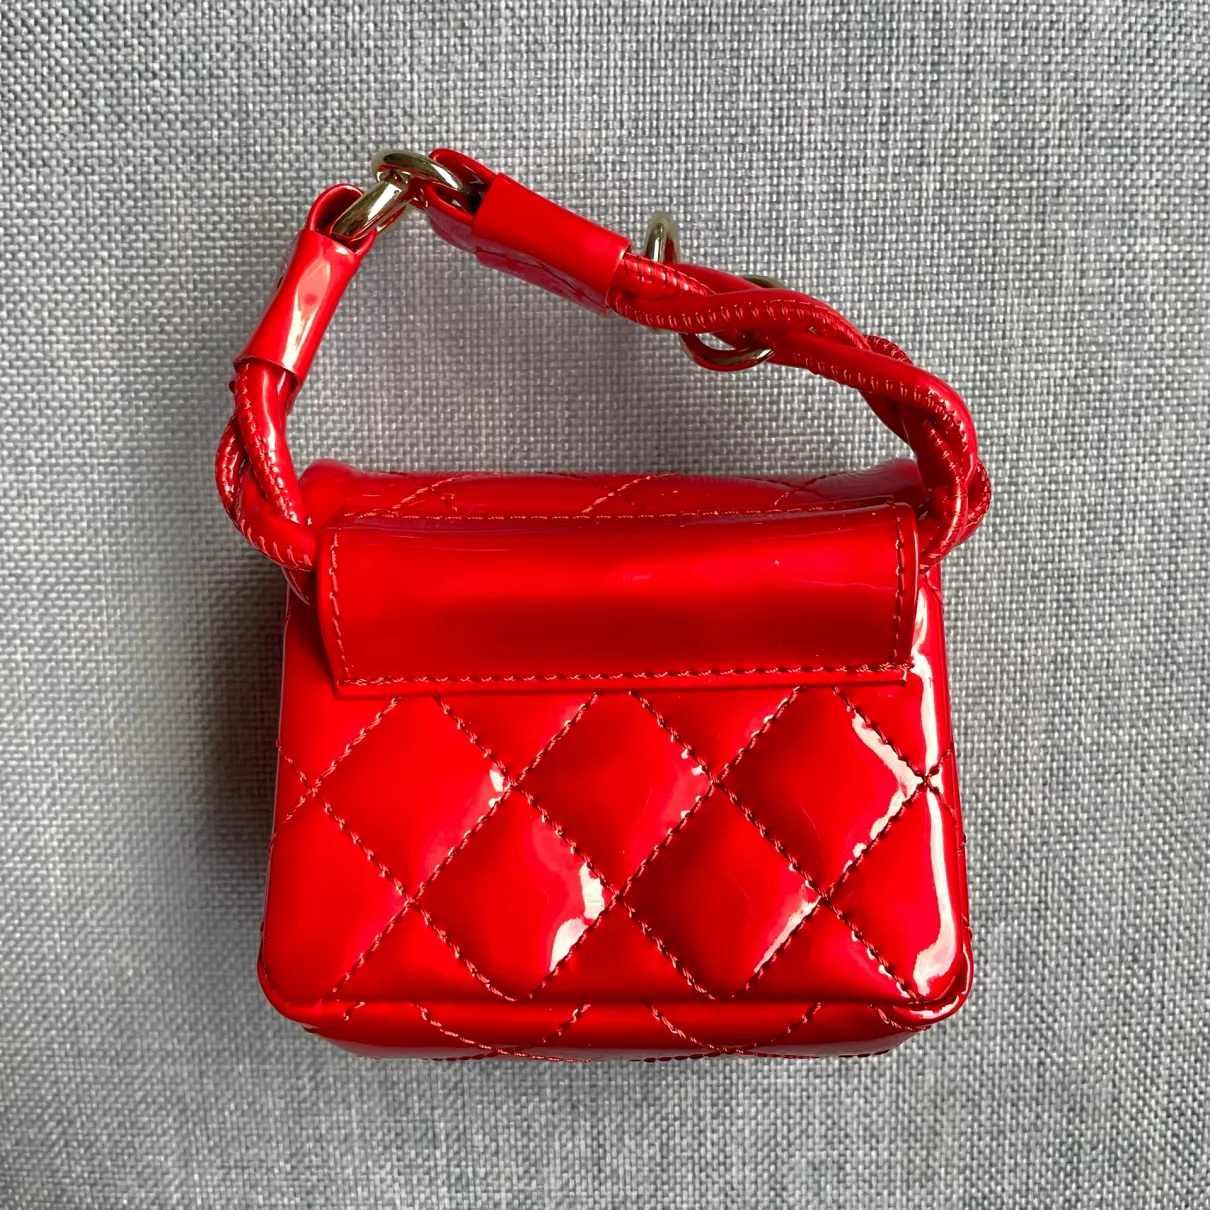 Buy Chanel Patent leather mini bag online - Vintage